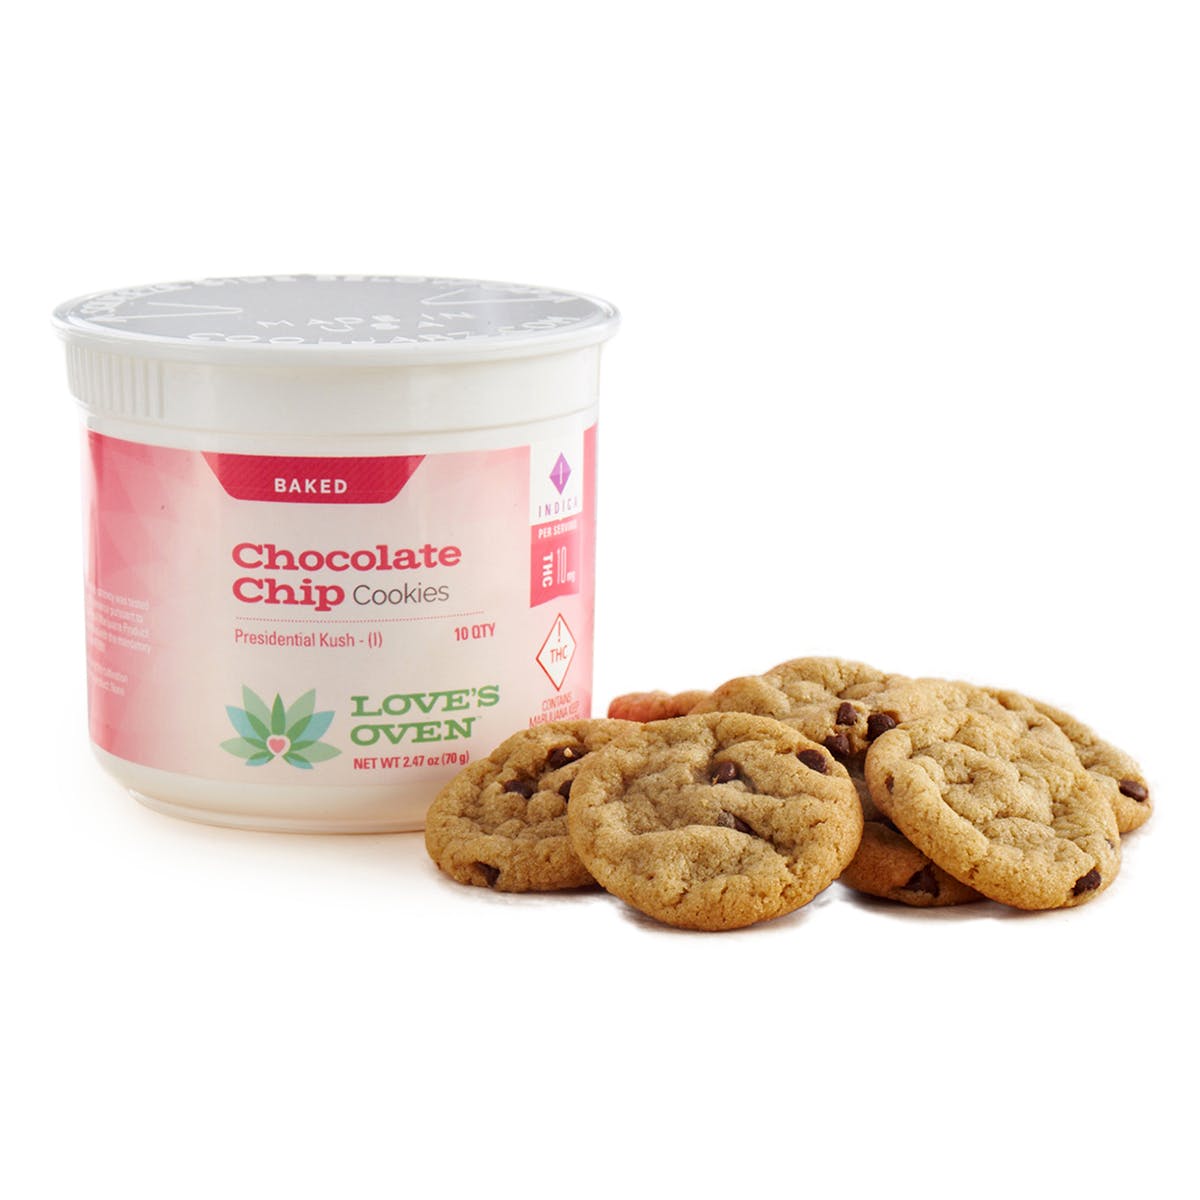 marijuana-dispensaries-urban-dispensary-denver-recreational-in-denver-recreational-chocolate-chip-cookies-2c-100mg